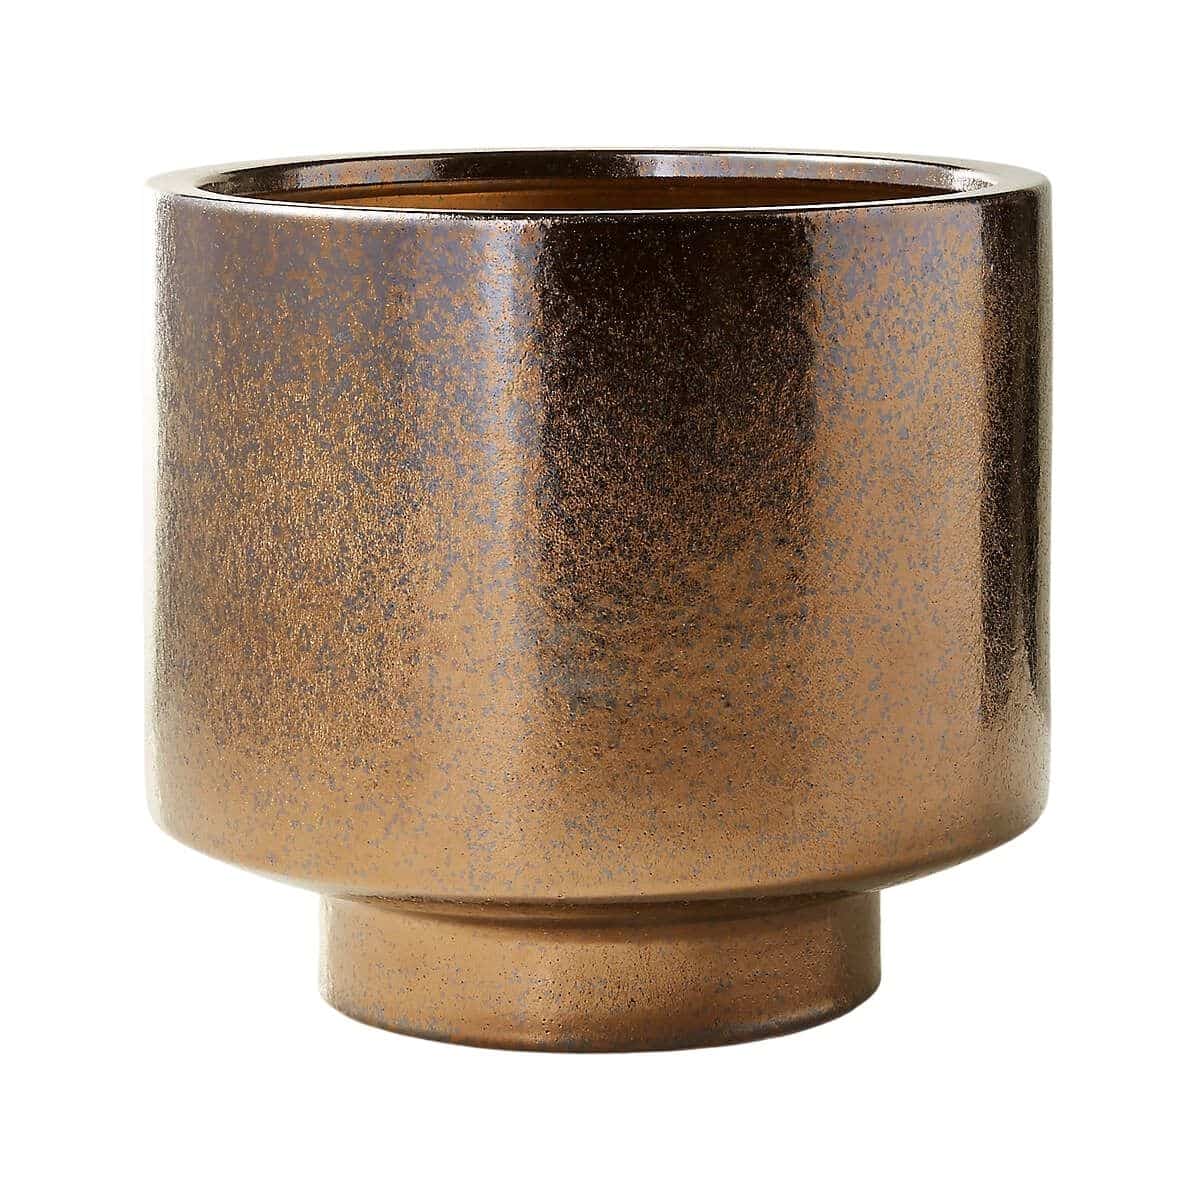 Metallic Bronze planter from CB2. 